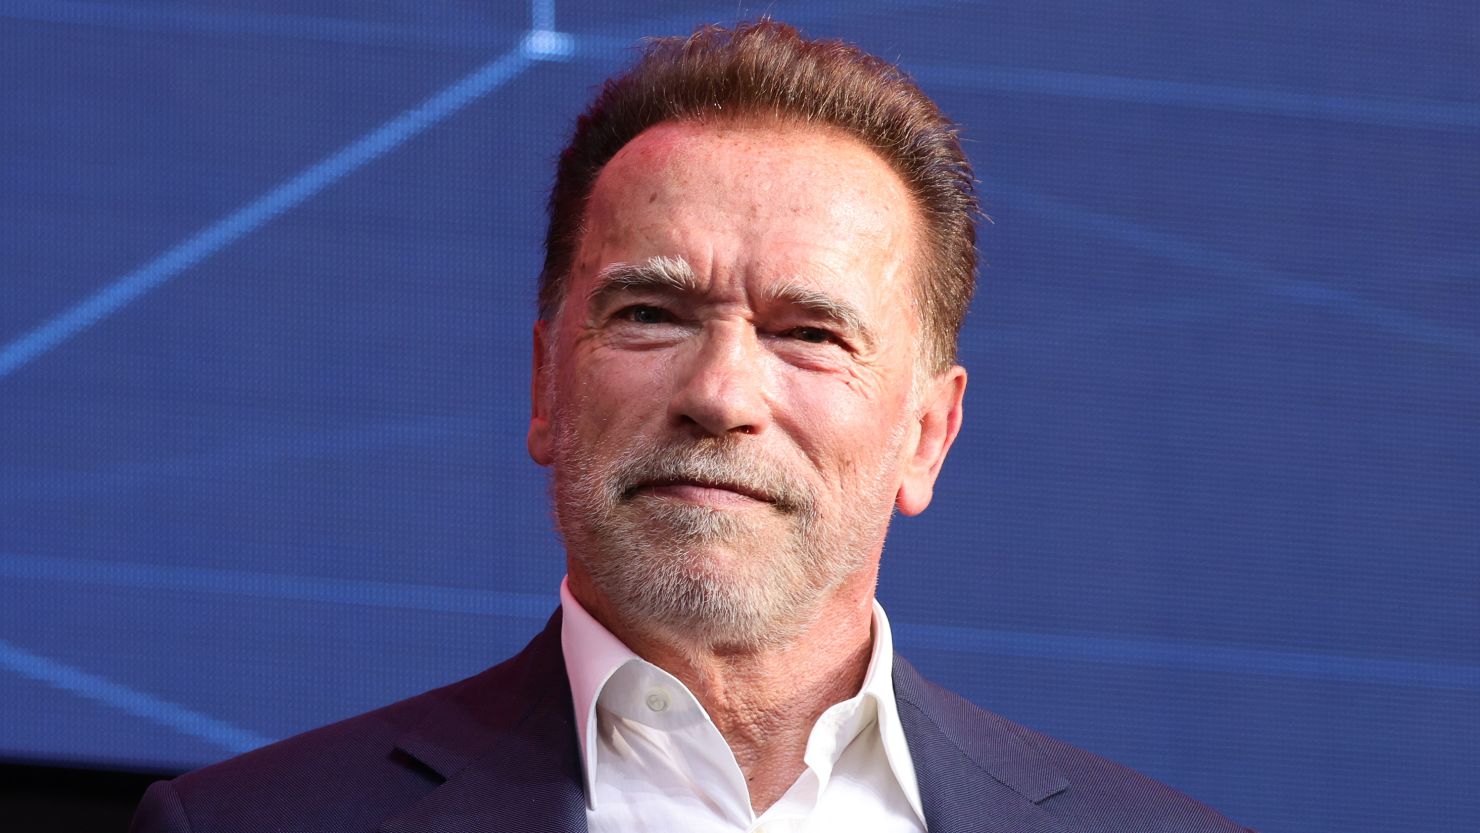 Arnold Schwarzenegger speaks on stage during the Digital X event on September 7, 2021, in Cologne, Germany. 